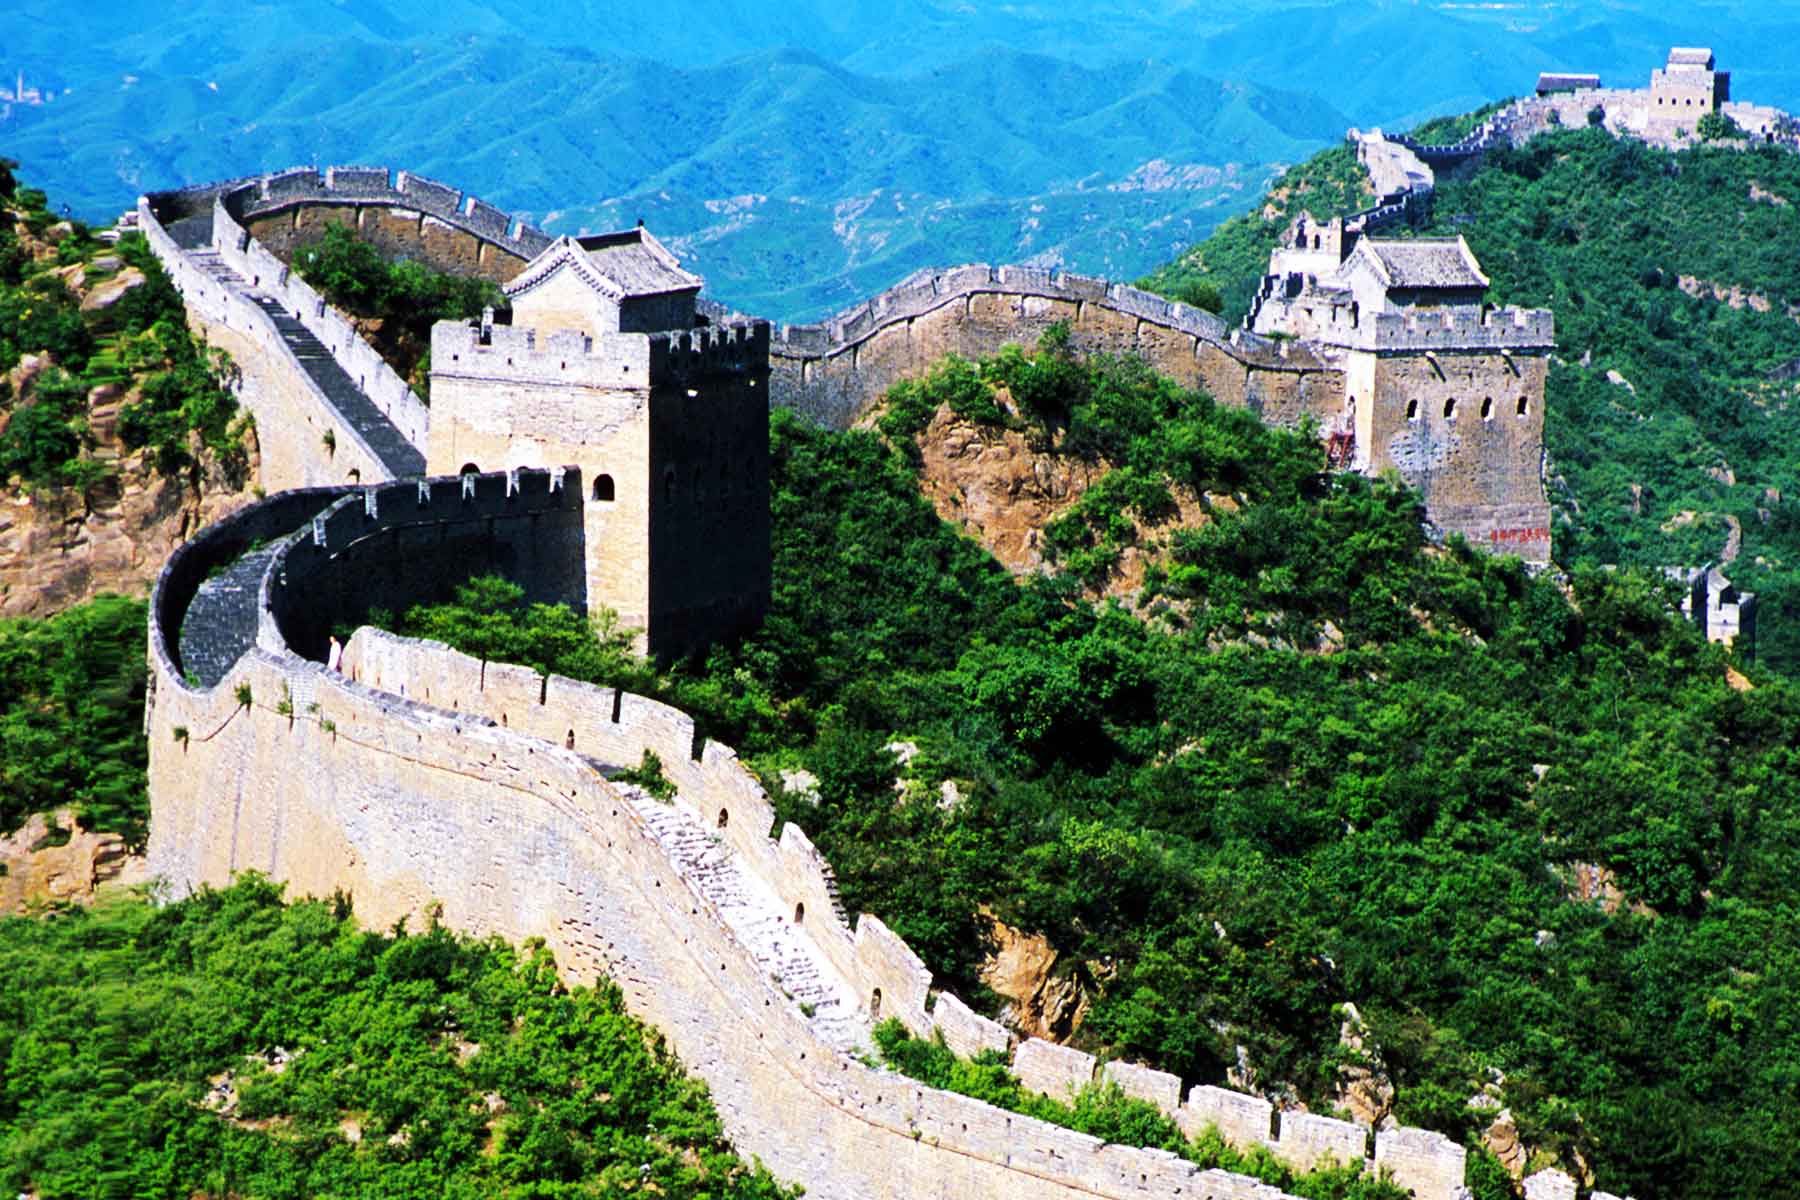 Jinshanling Great Wall of China | Surf Dr Steven Martin | Professor of Asian Studies | Study Abroad China Peking University | Skateboarding the Great Wall